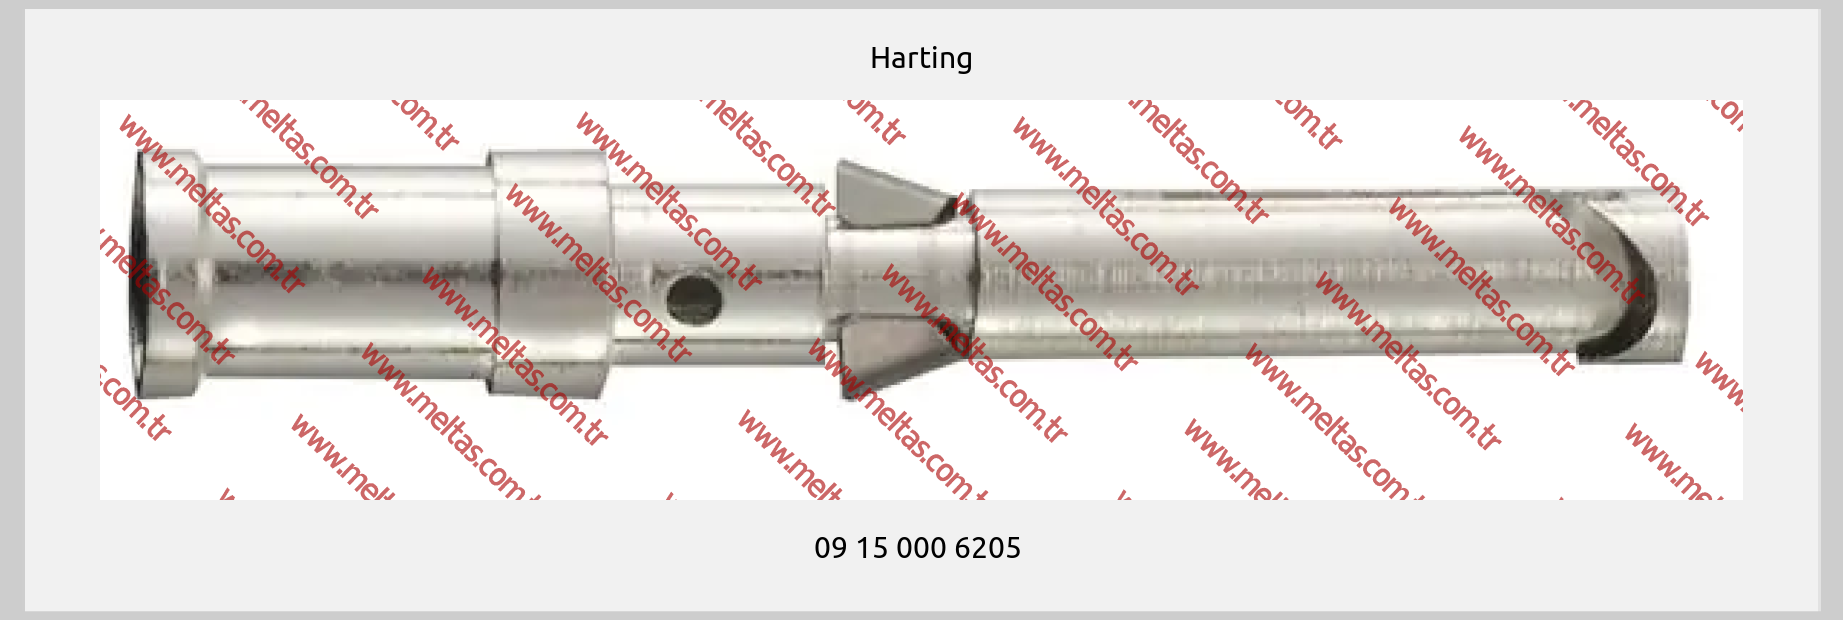 Harting - 09 15 000 6205 